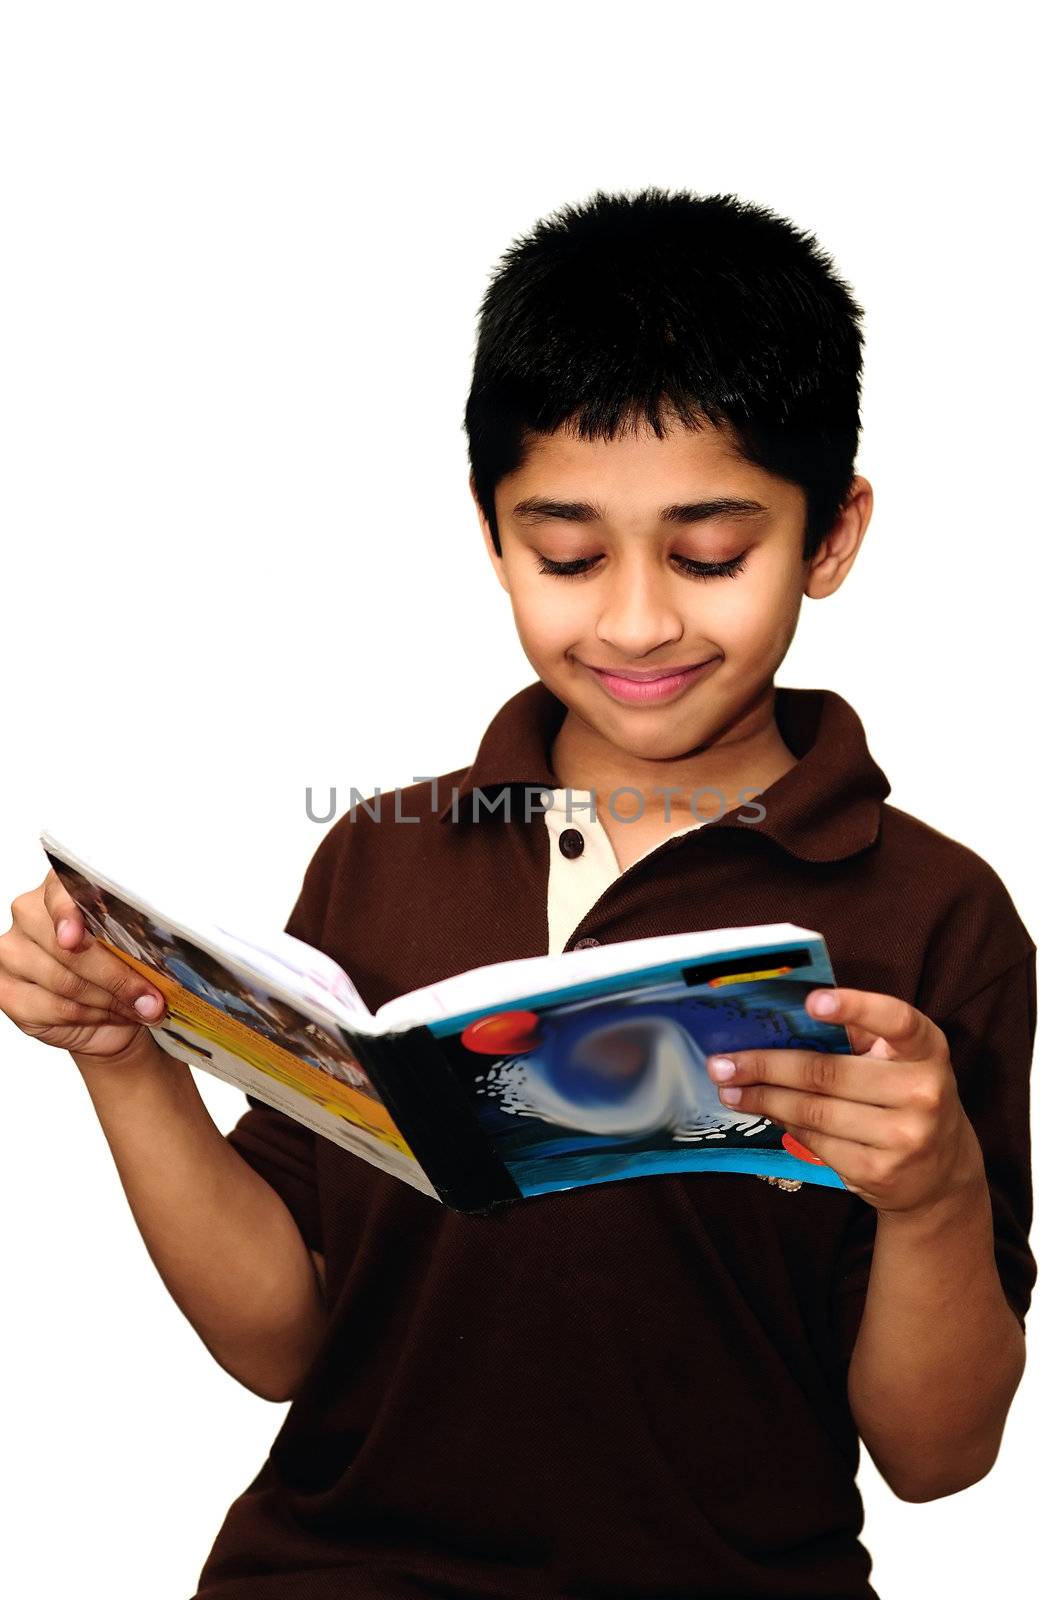 An handsome Indian kid enjoying reading books